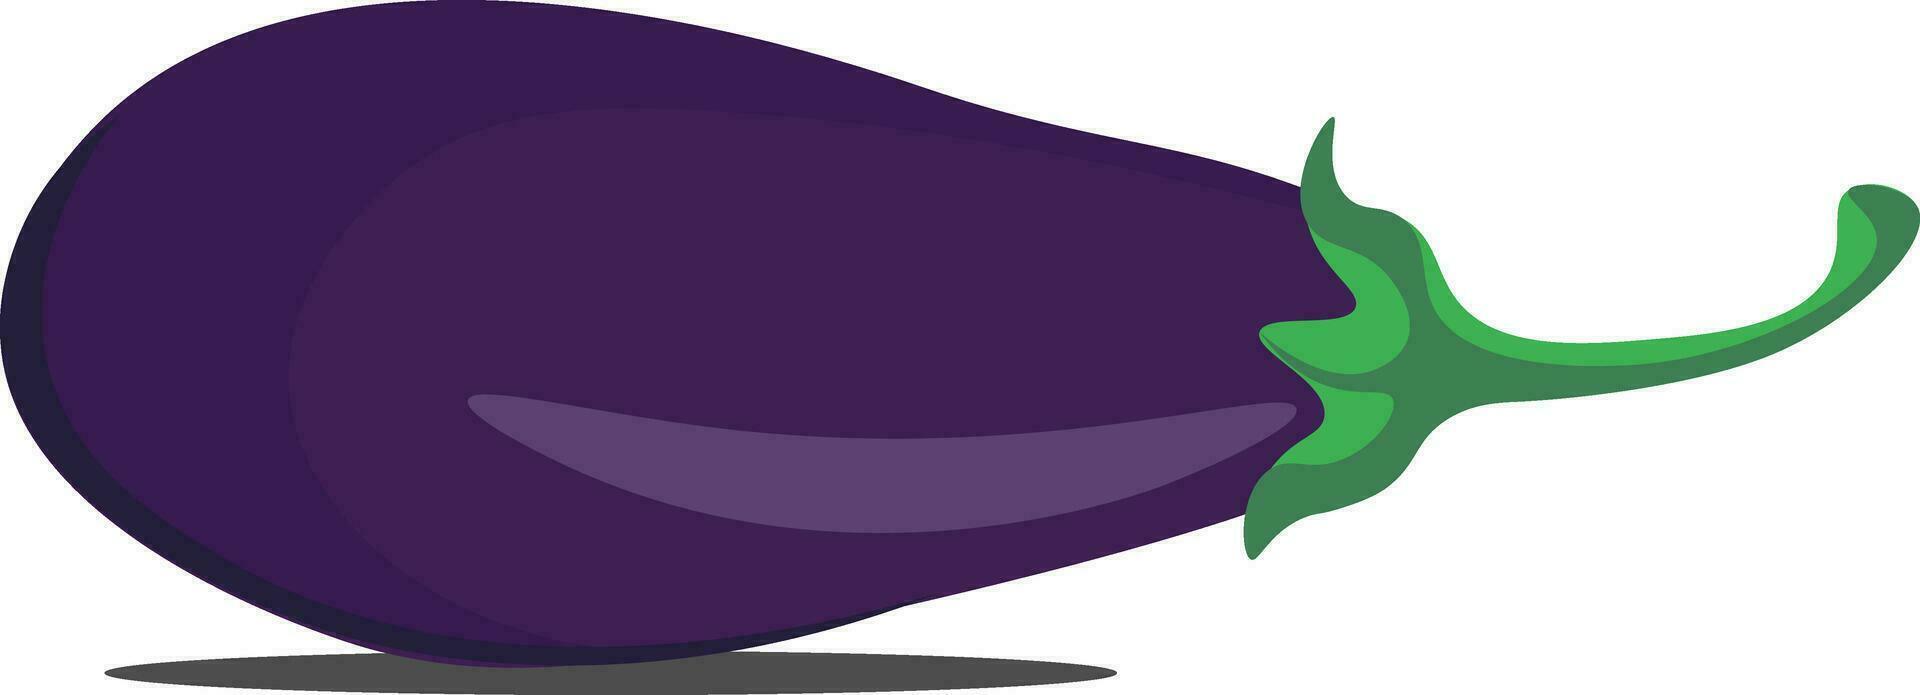 aubergine, vector of kleur illustratie.